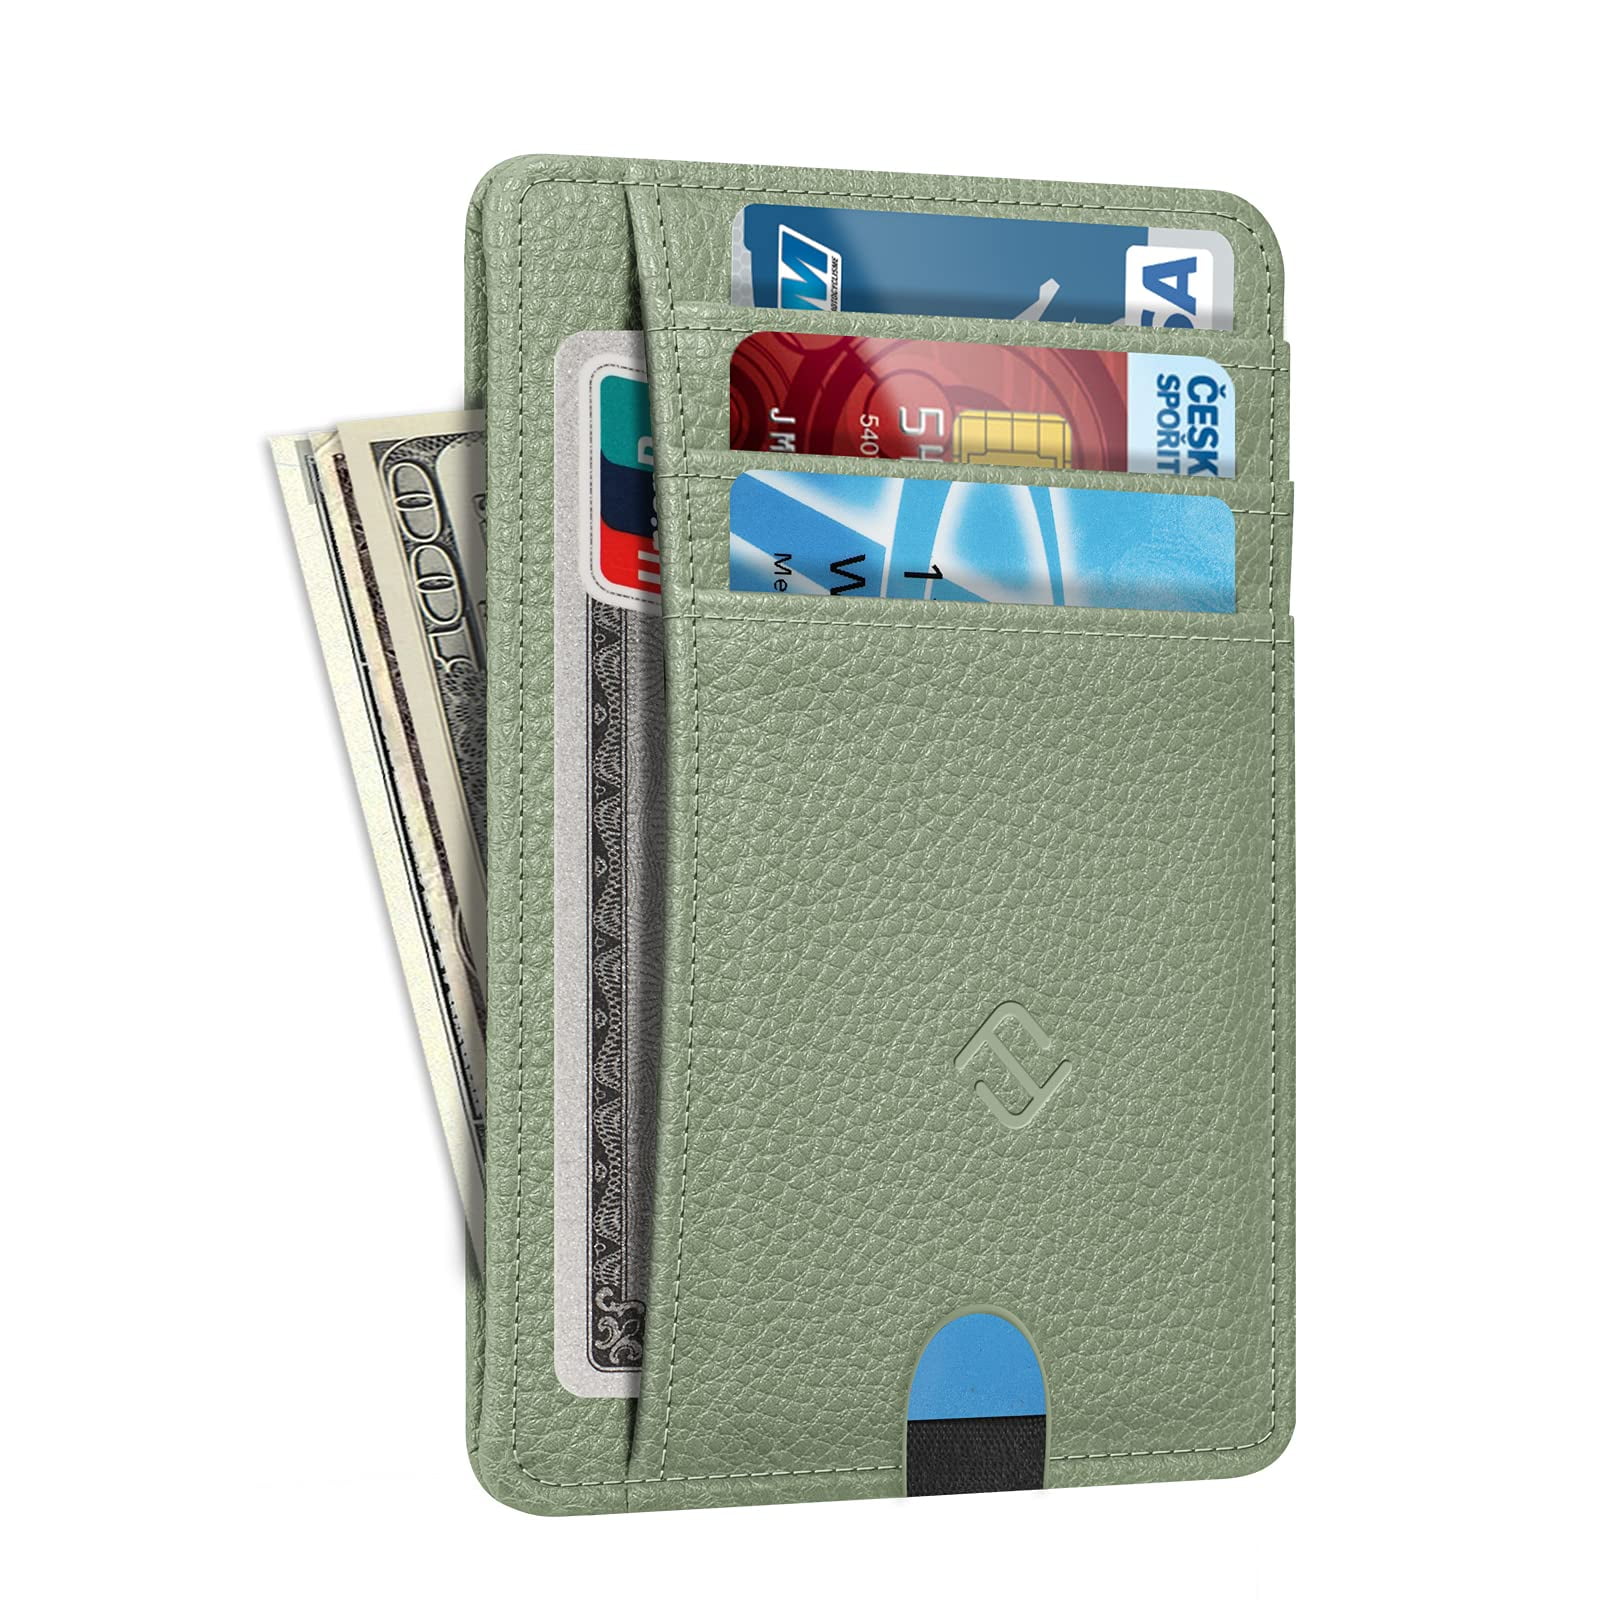 20 Credit Card RFID Holder Snap Wallet/ Phone/ Money Holder/keychain Blue Only 